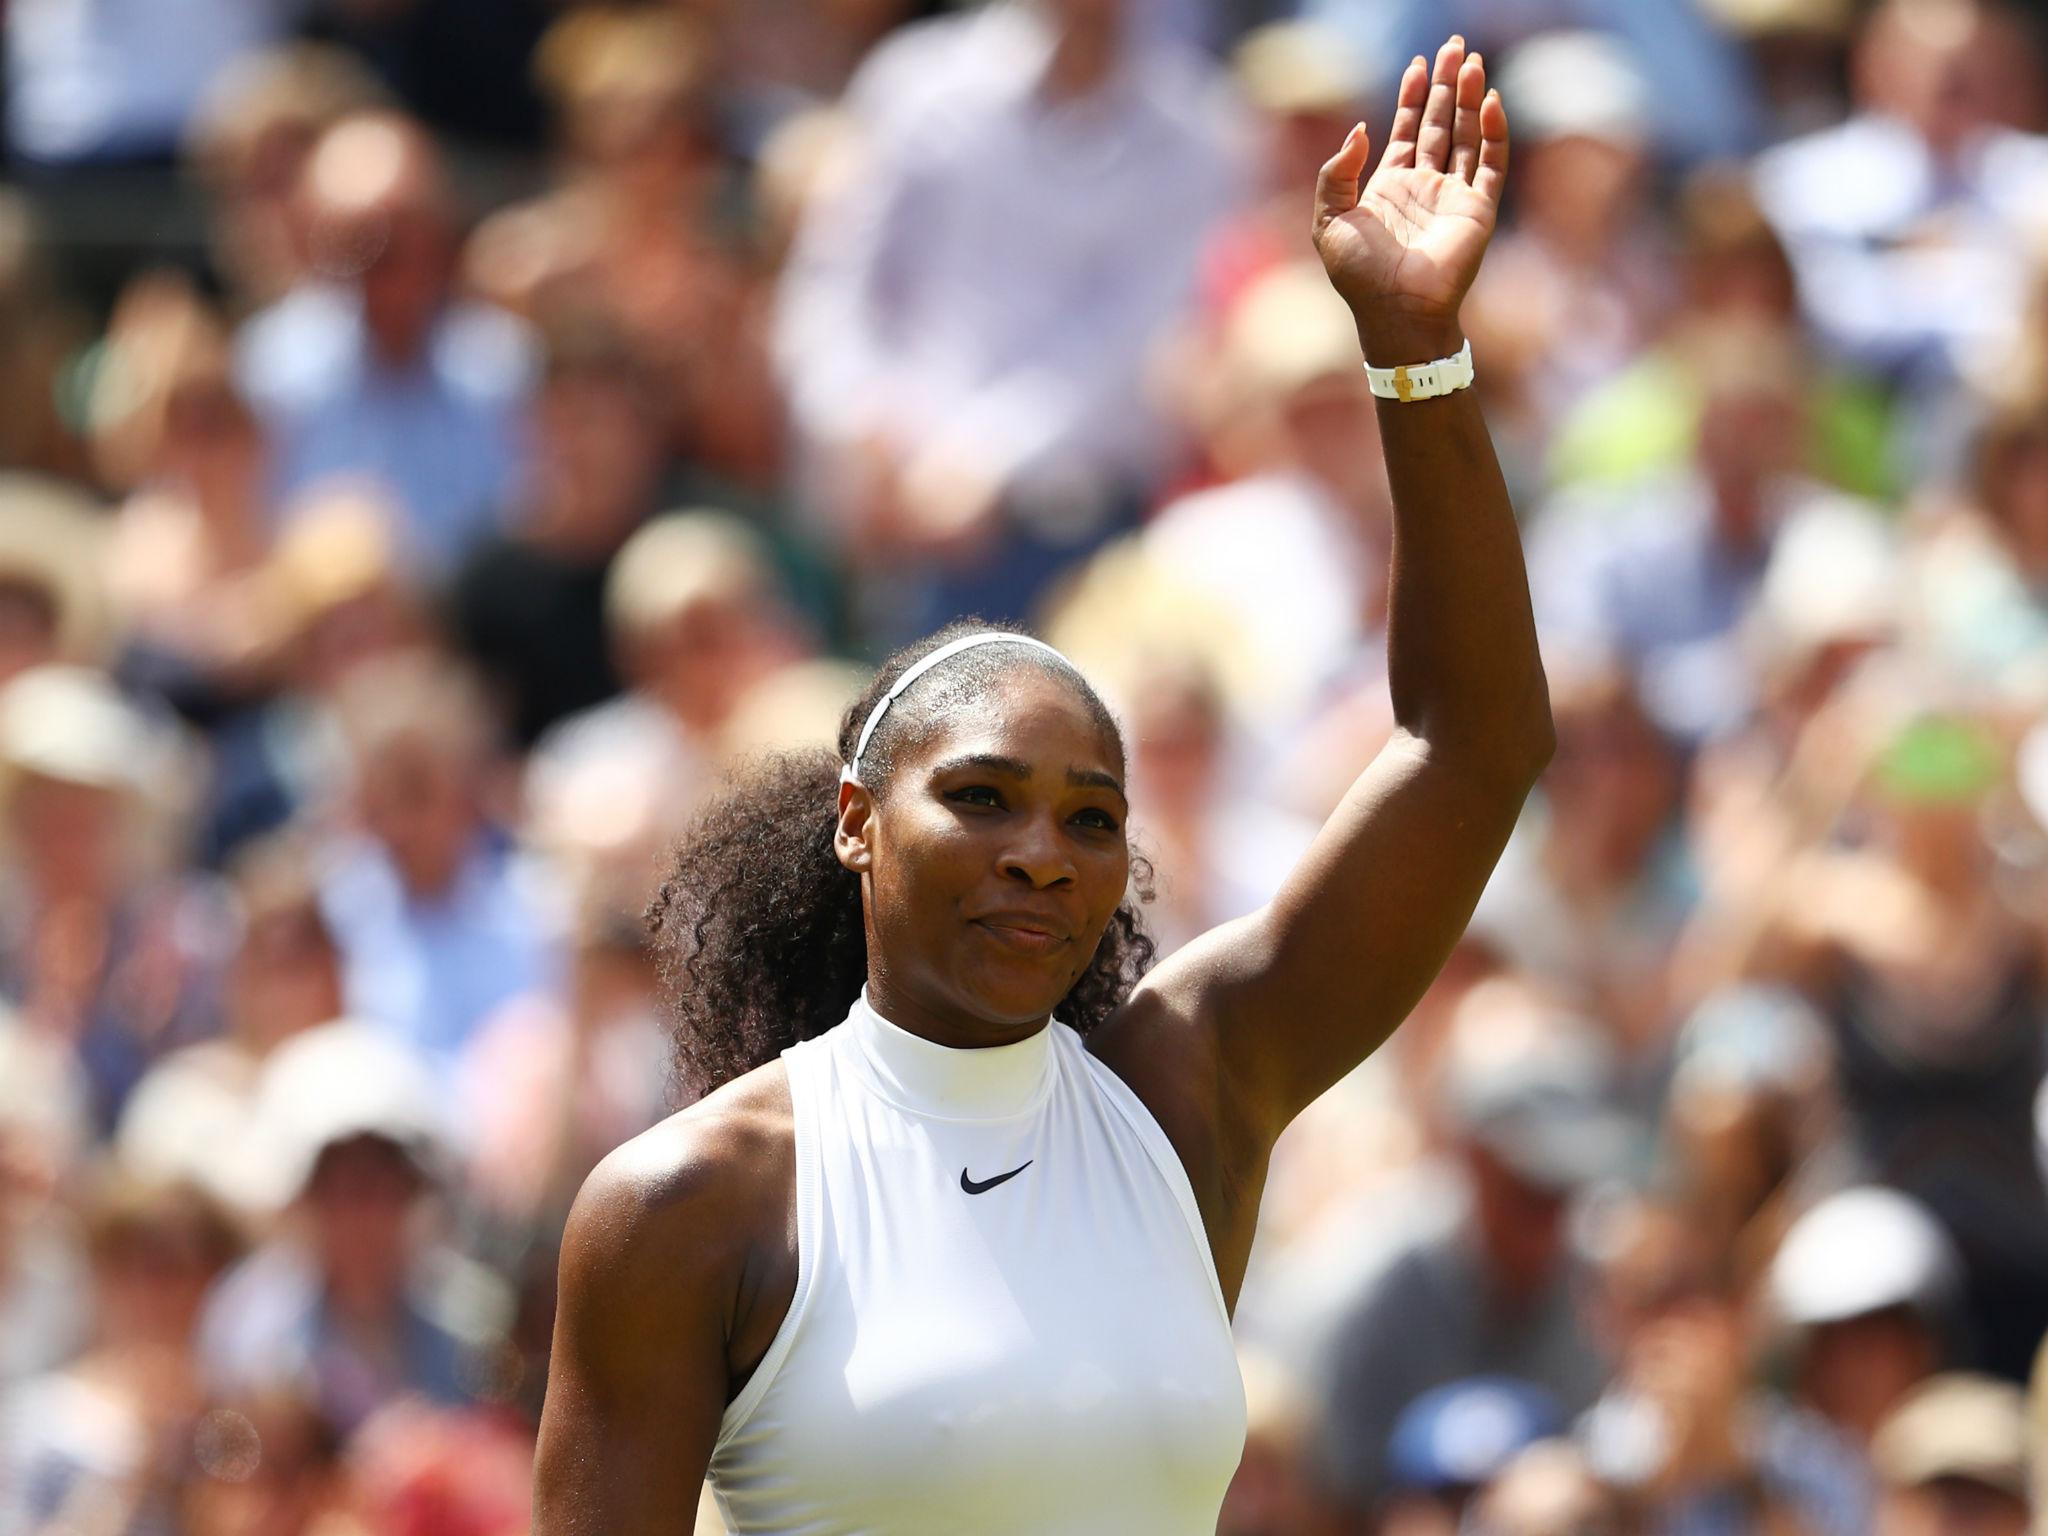 Williams celebrating victory after winning her semi-final match against Elena Vesnina at Wimbledon